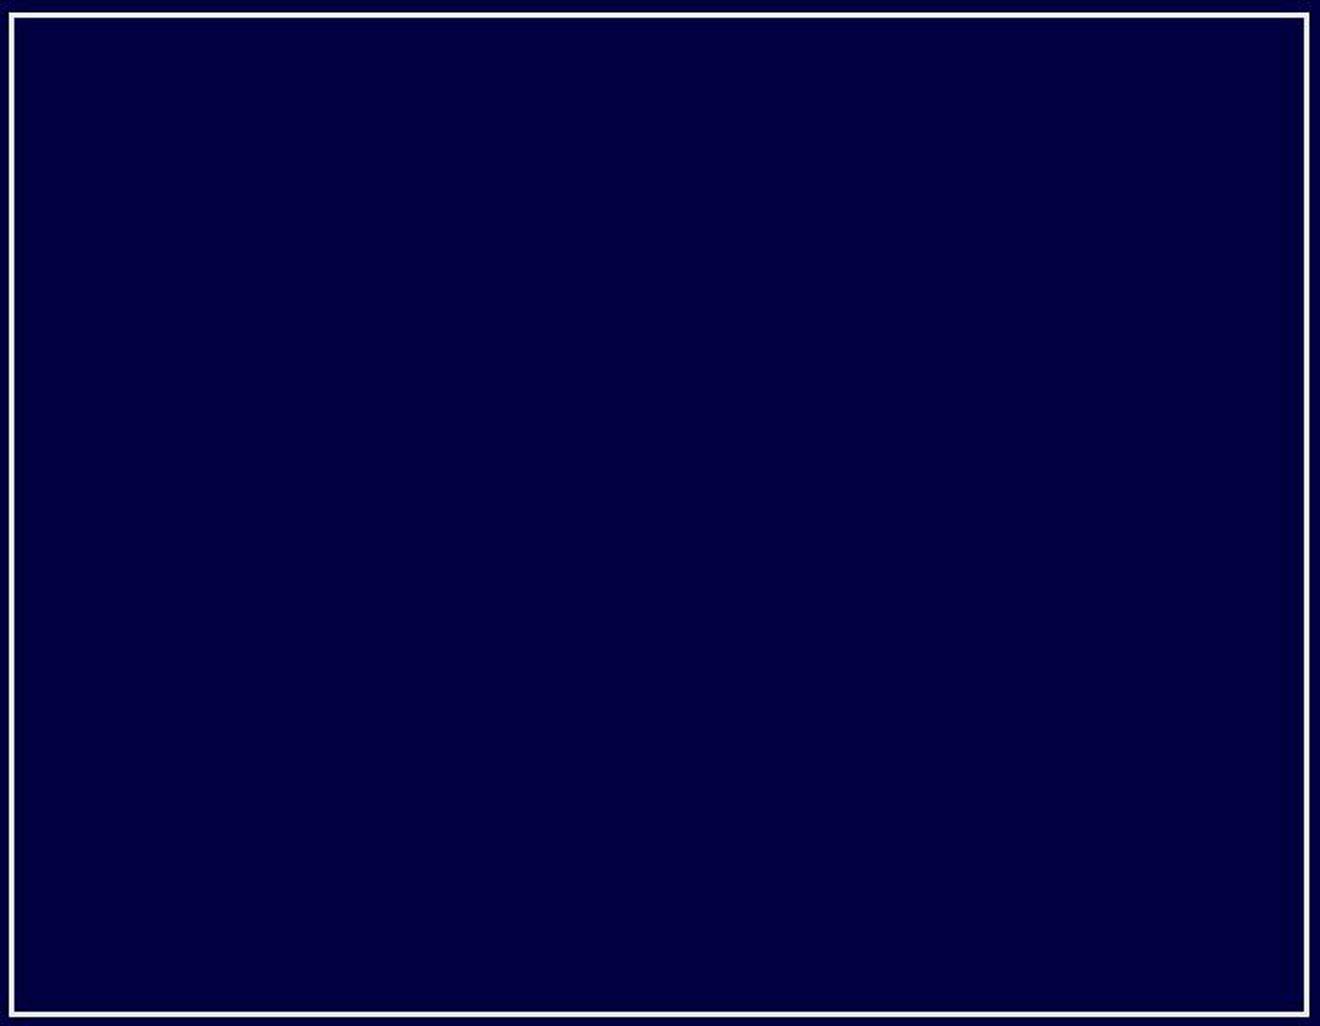 Eclipse 9994 - A56 - Title - Blank Slide